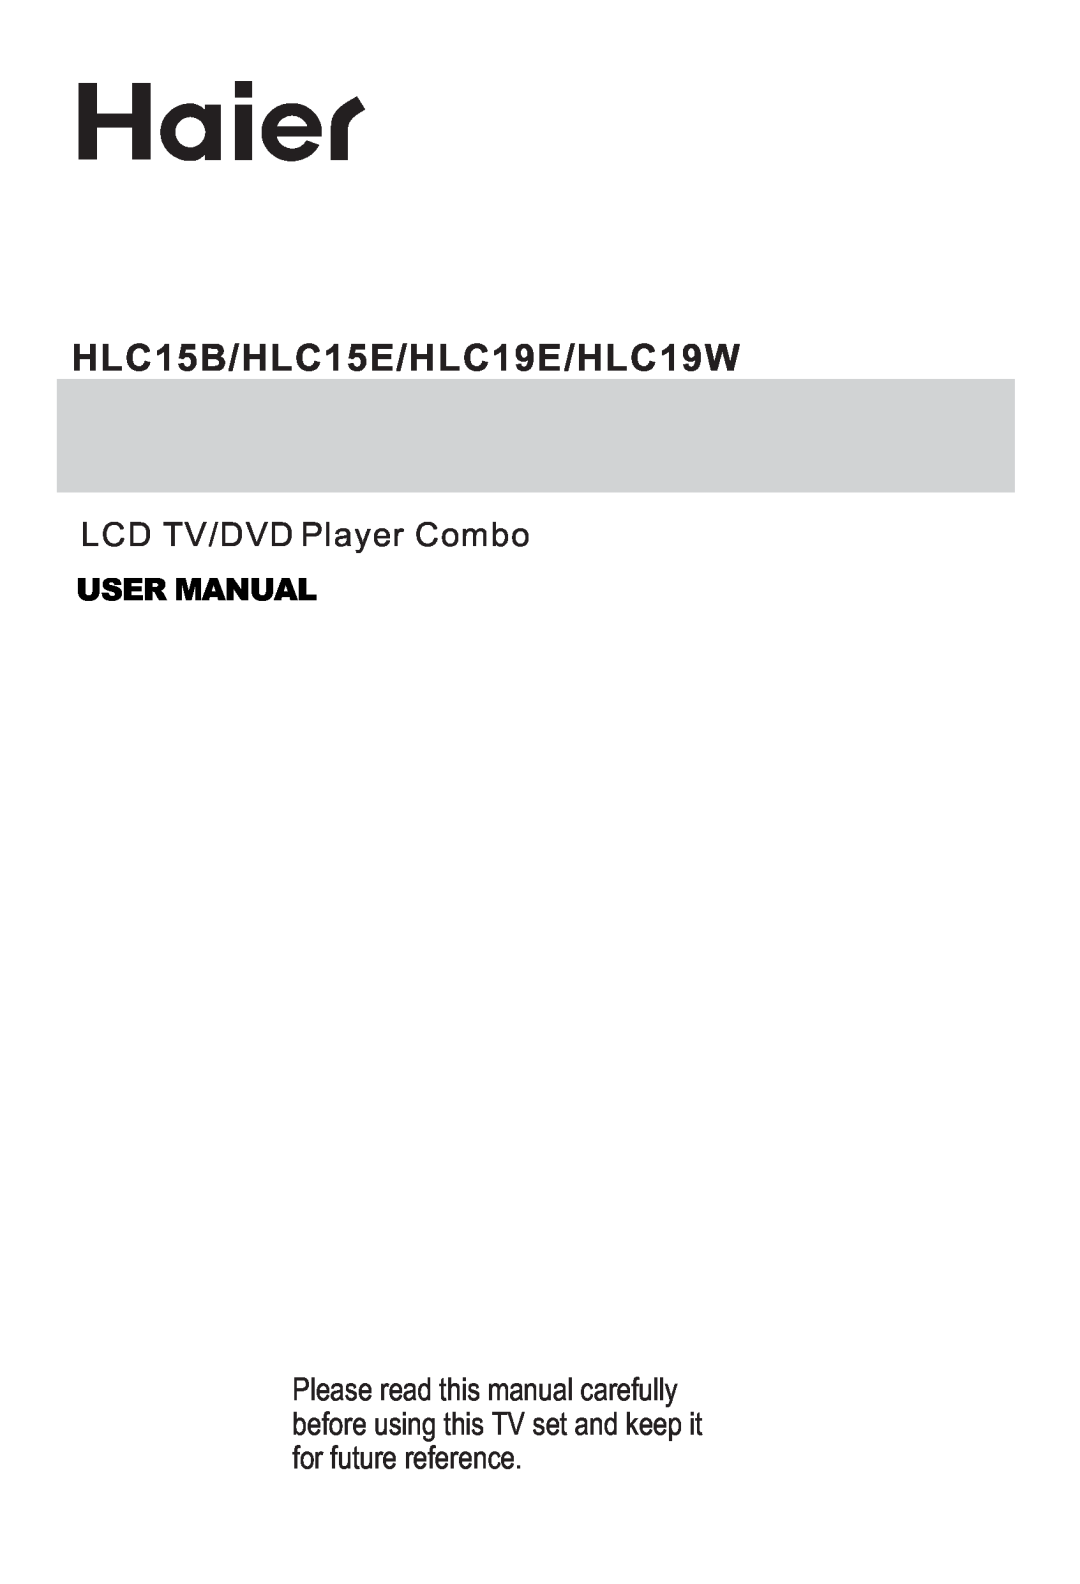 Haier user manual HLC15B/HLC15E/HLC19E/HLC19W, LCD TV/DVD Player Combo, User Manual 